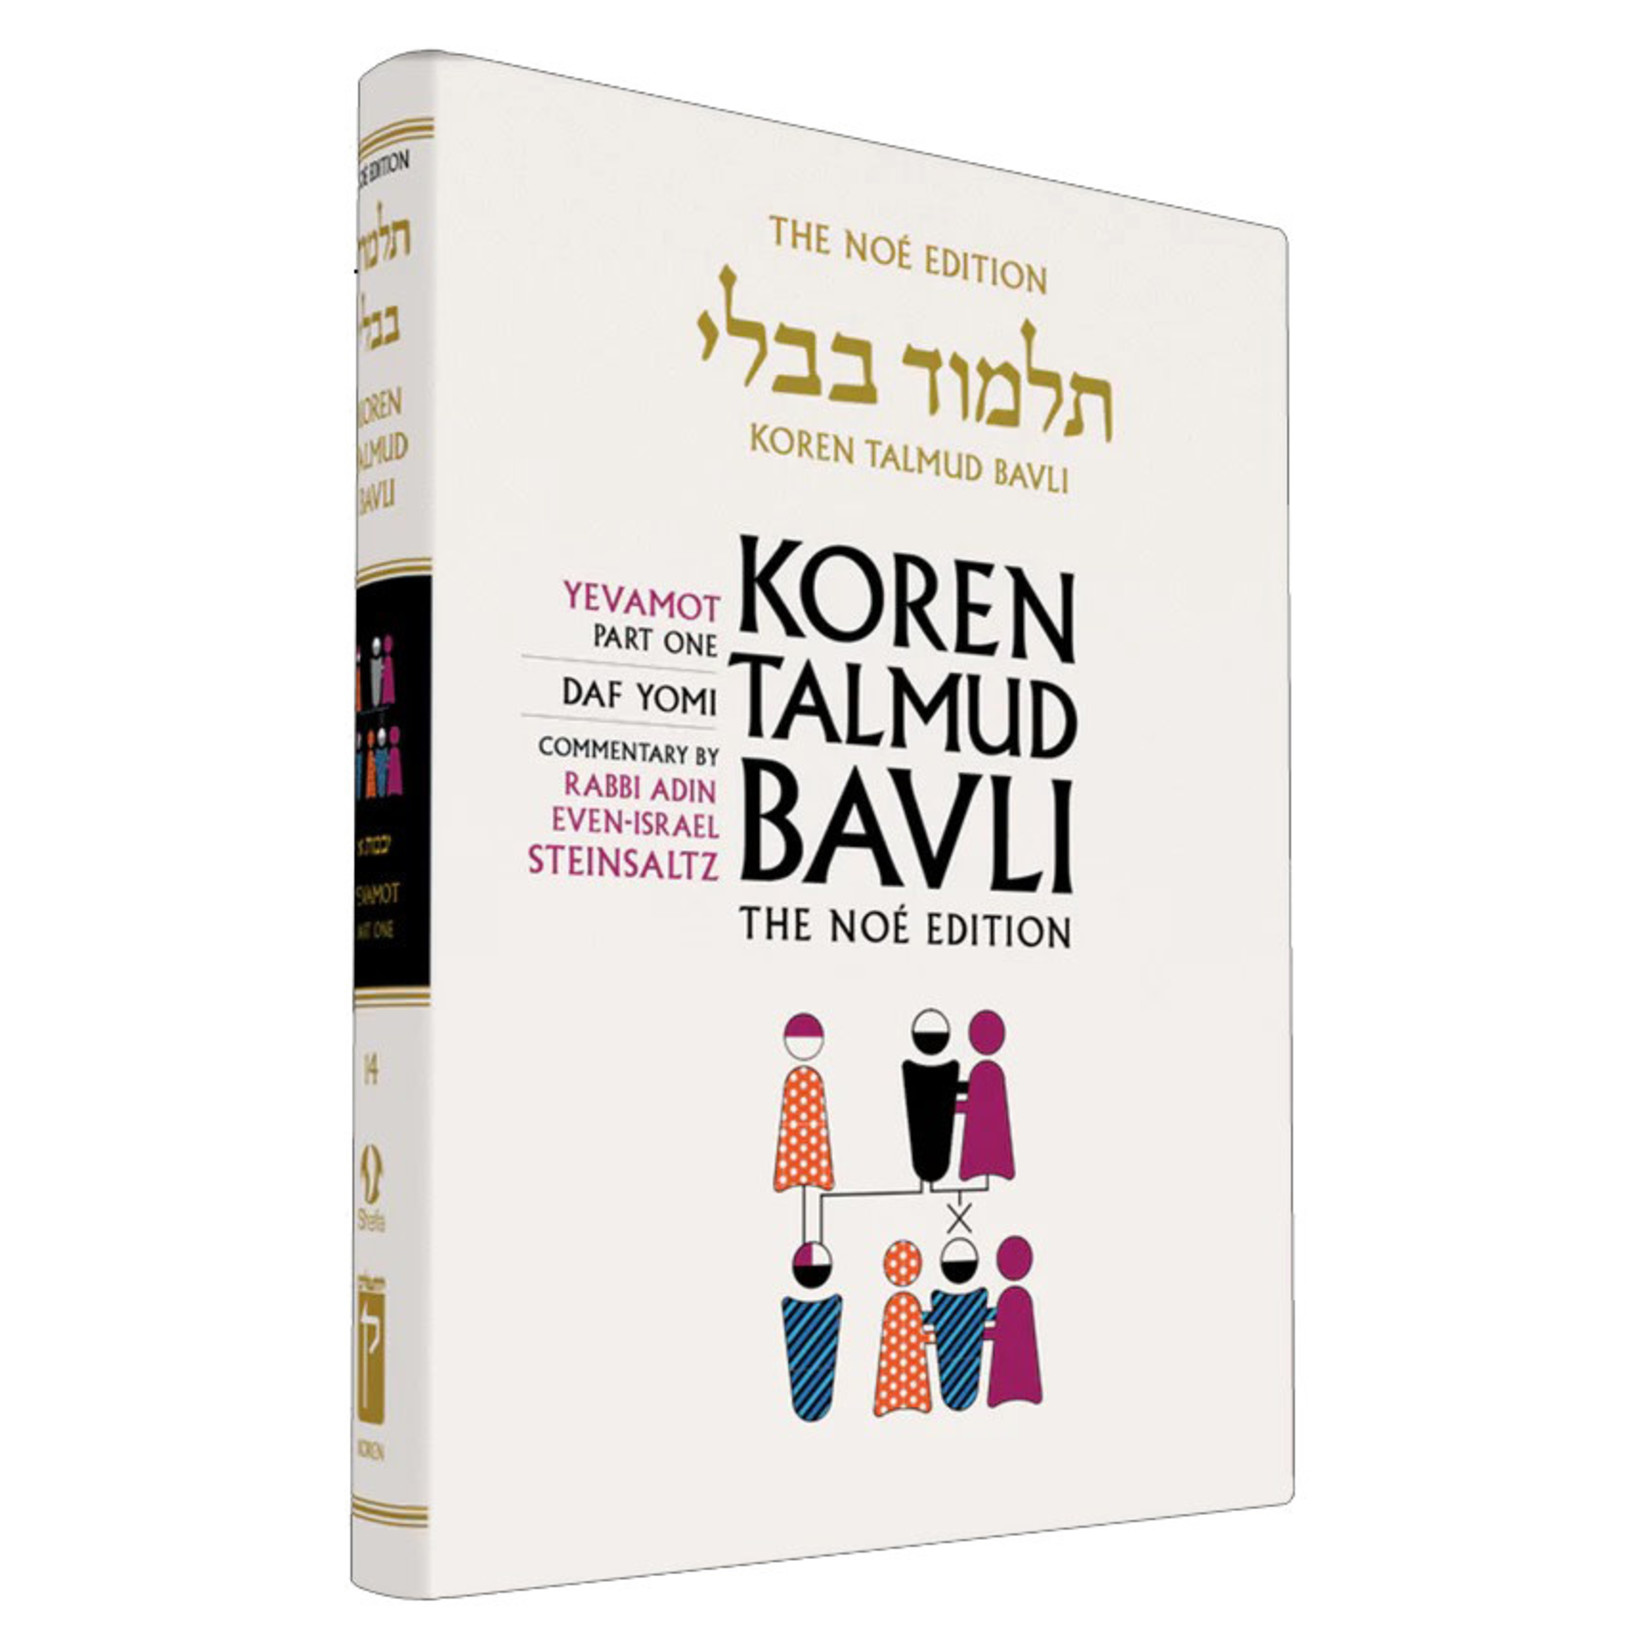 Yevamot Part 1 - Koren Talmud Bavli Noé Edition Daf Yomi Size - Volume 14